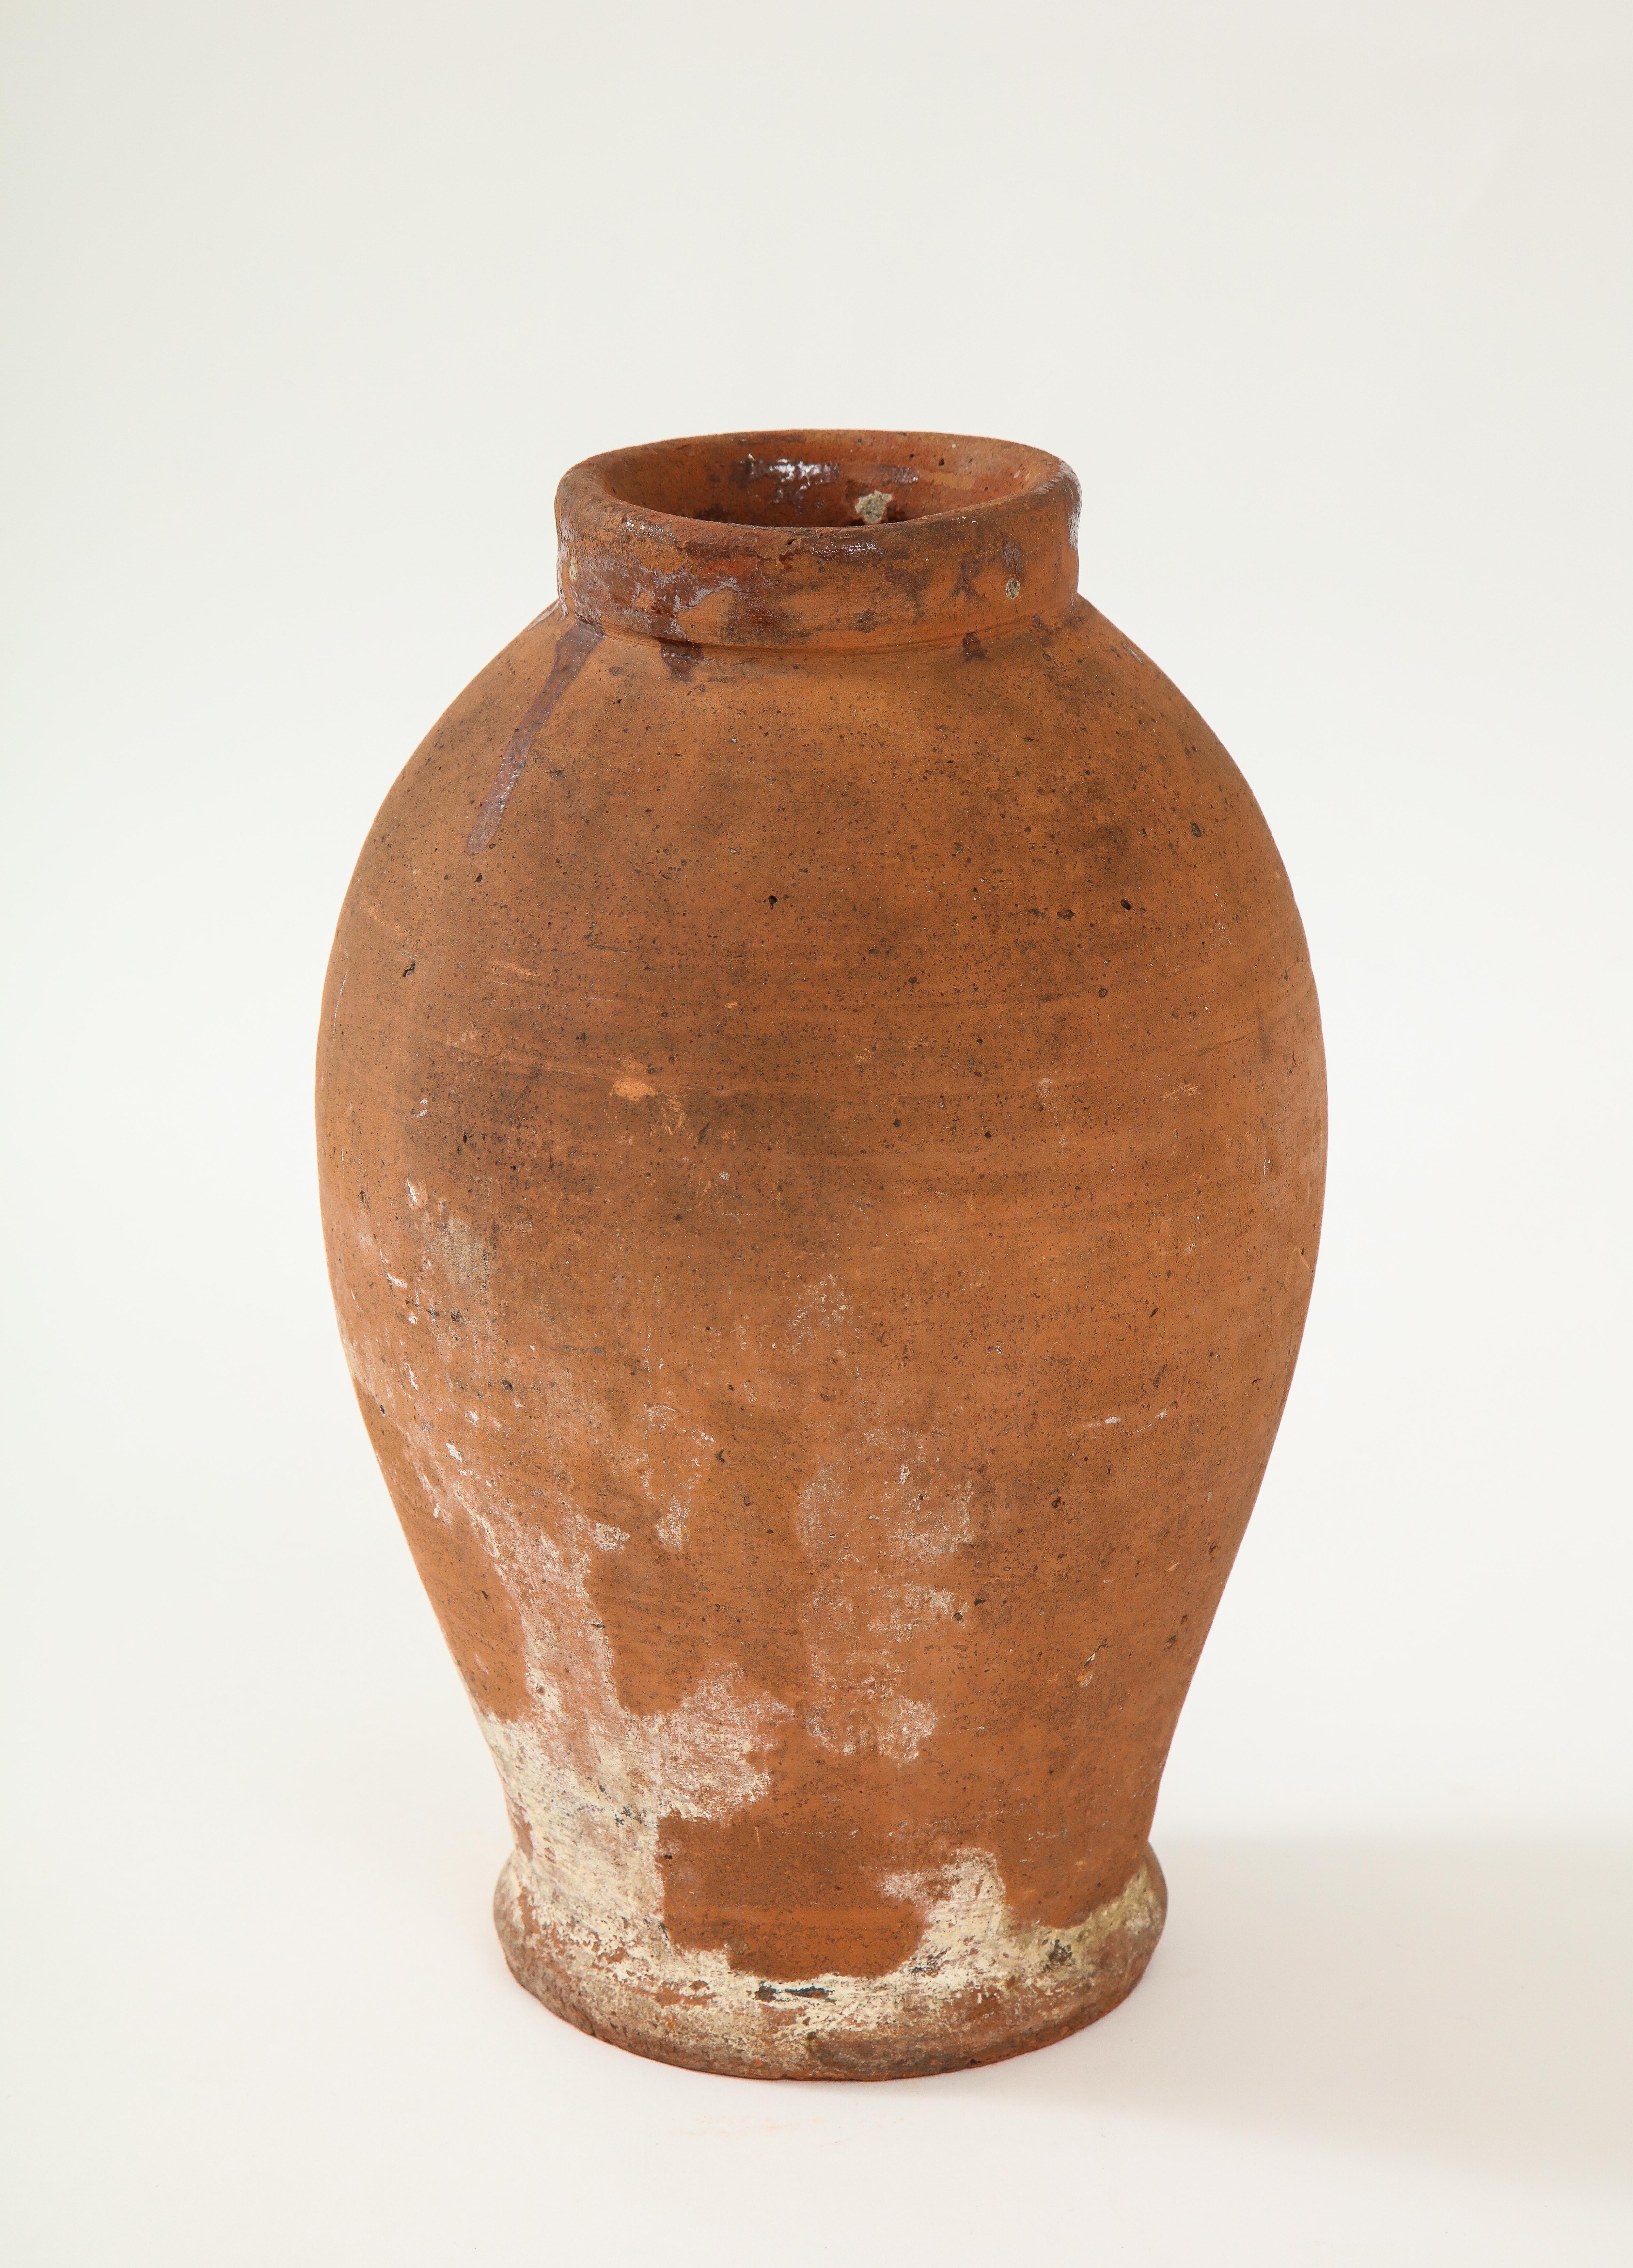 Elegantly shaped rustic unglazed terracotta storage vessel/jar from Holland.